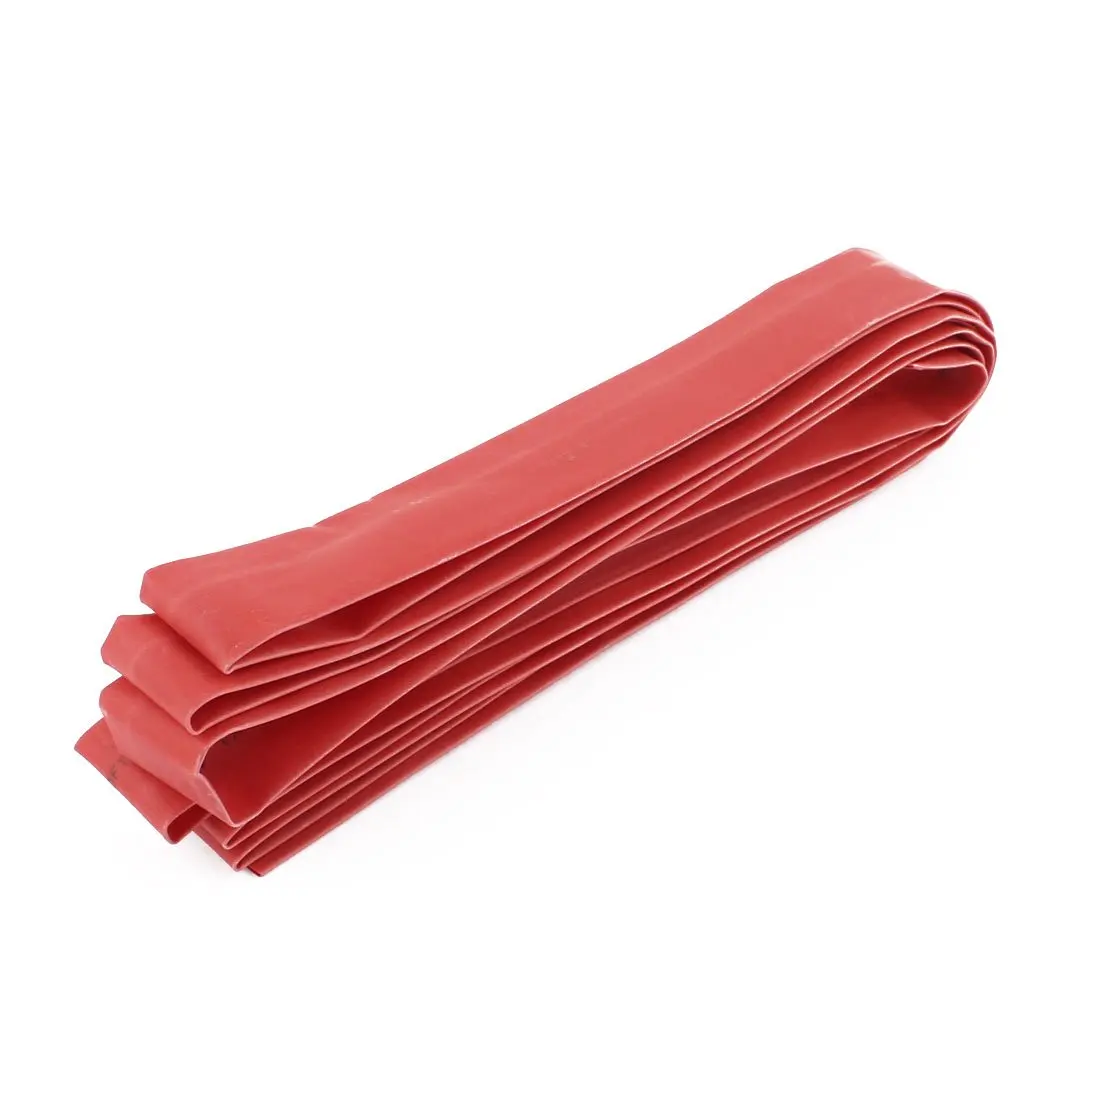 

Keszoox Polyolefin 3 Meter Length 20mm Dia Heat Shrinkable Tube Sleeving Red